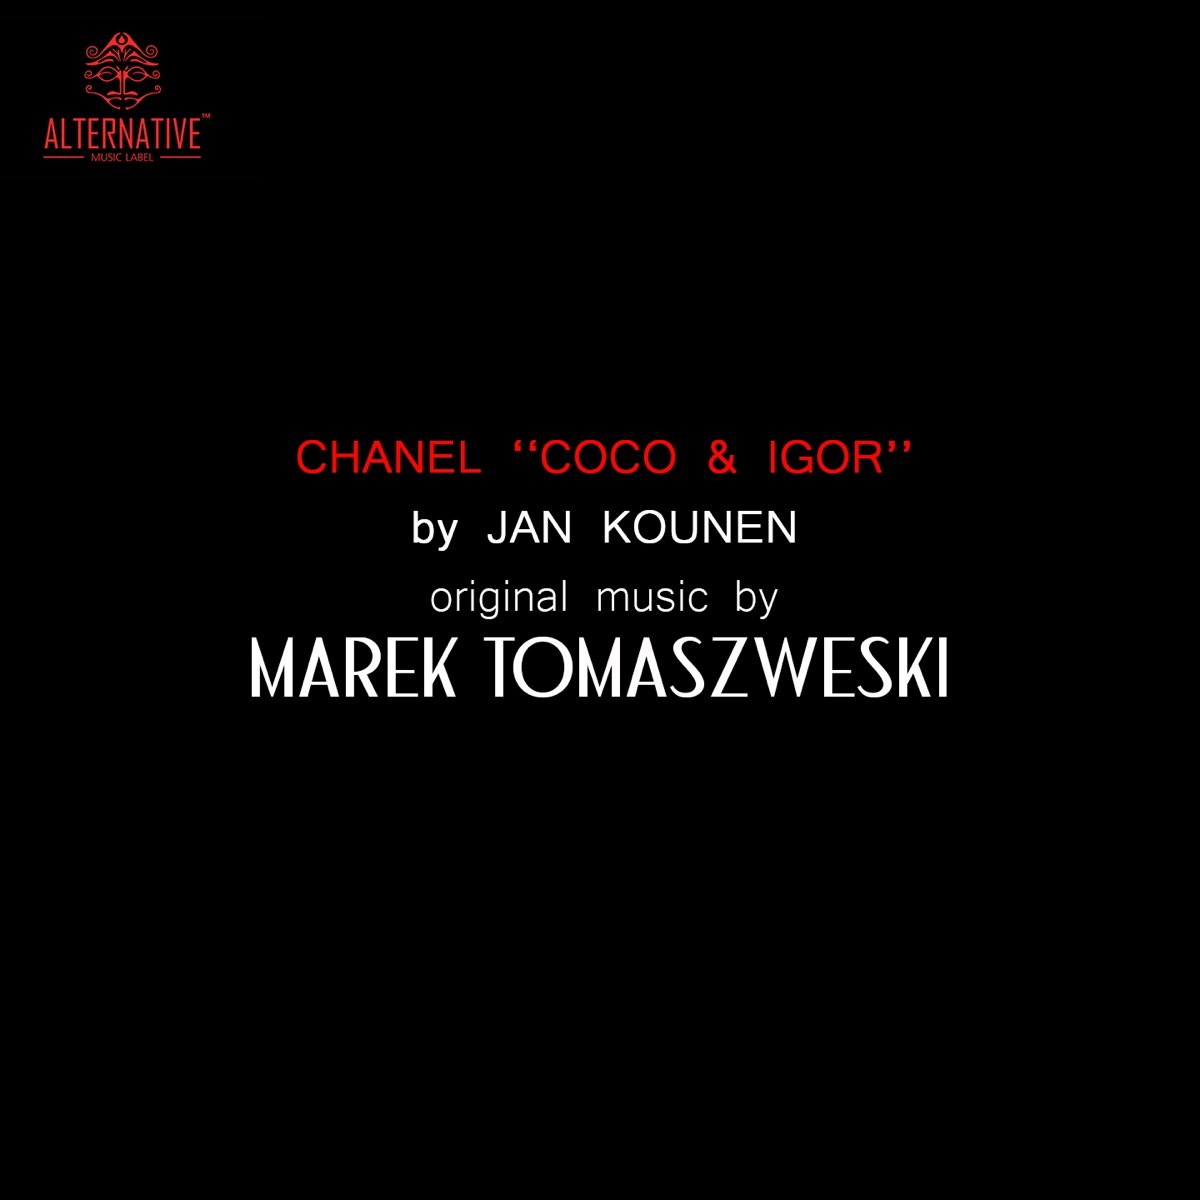 Coco Chanel & Igor Stravinsky - Ragtime (Bande originale du film) - Single  - Album by Marek Tomaszewski - Apple Music